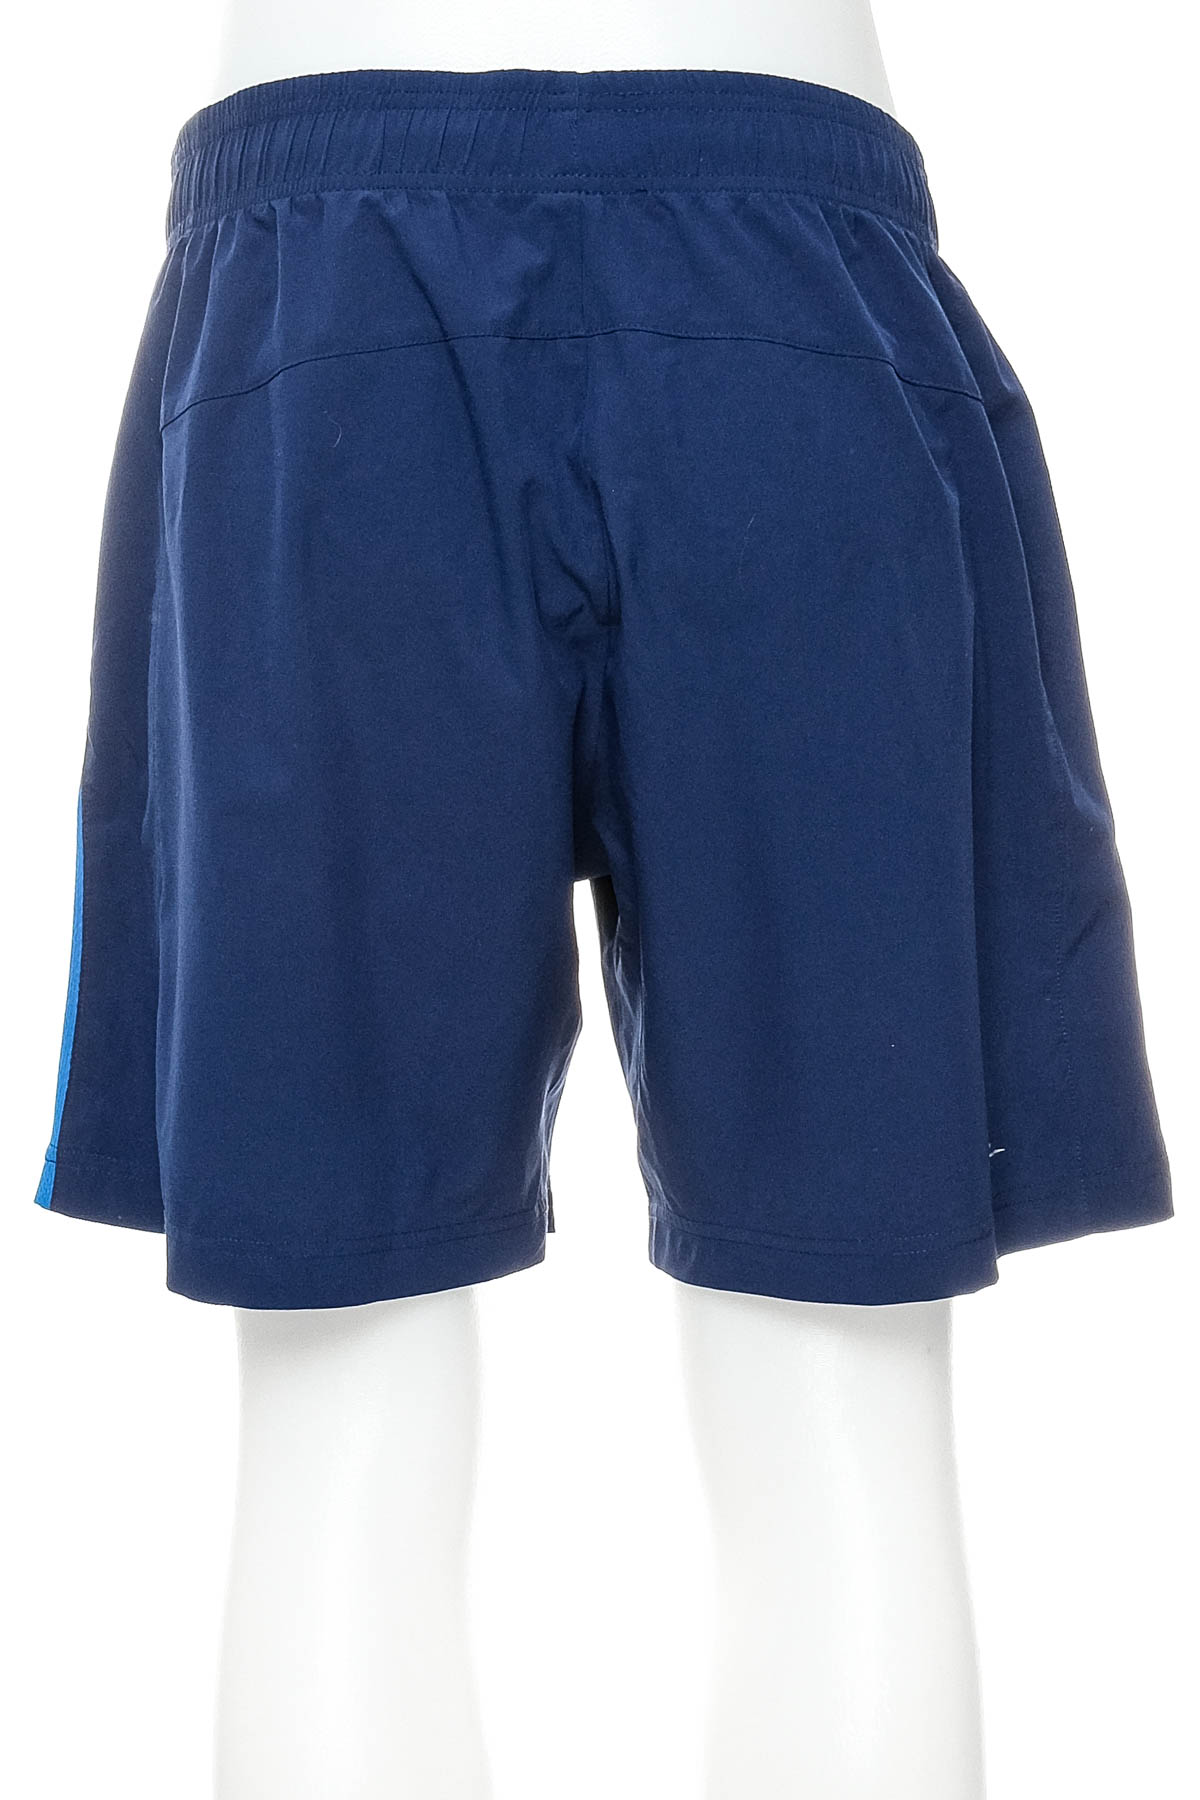 Men's shorts - Crane - 1